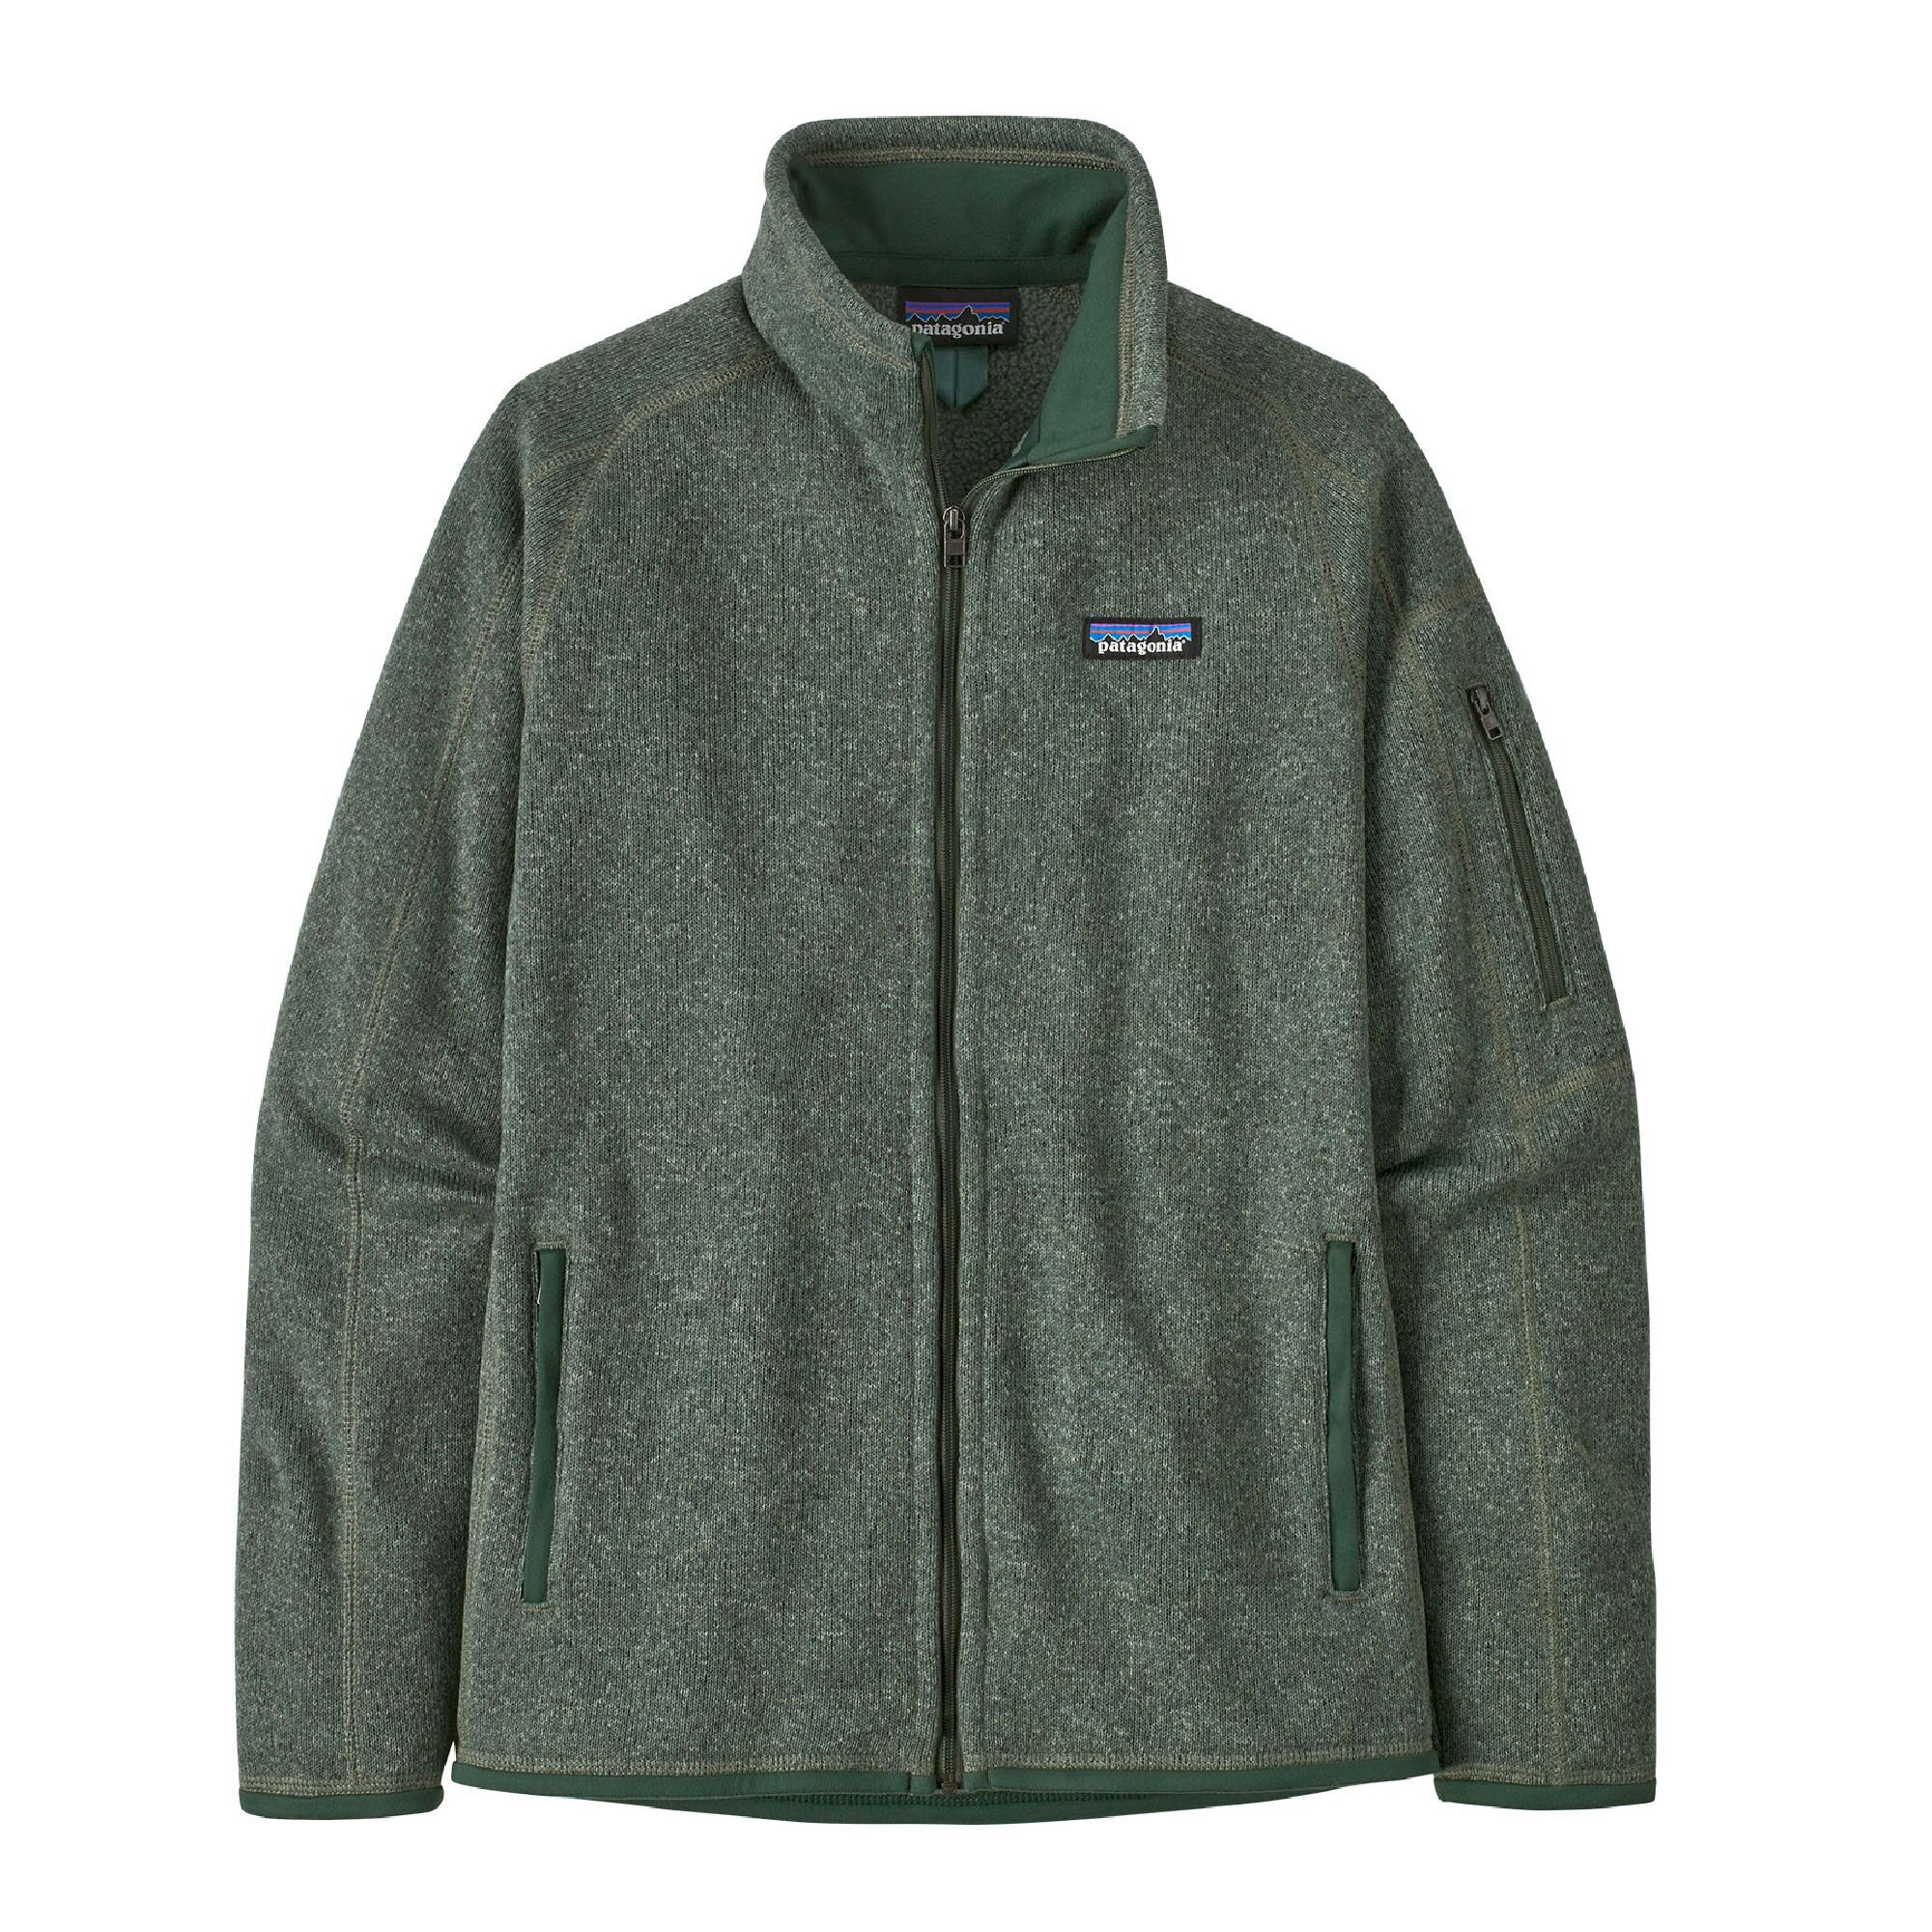 Patagonia Better Sweater Jkt - Fleece jacket - Women's